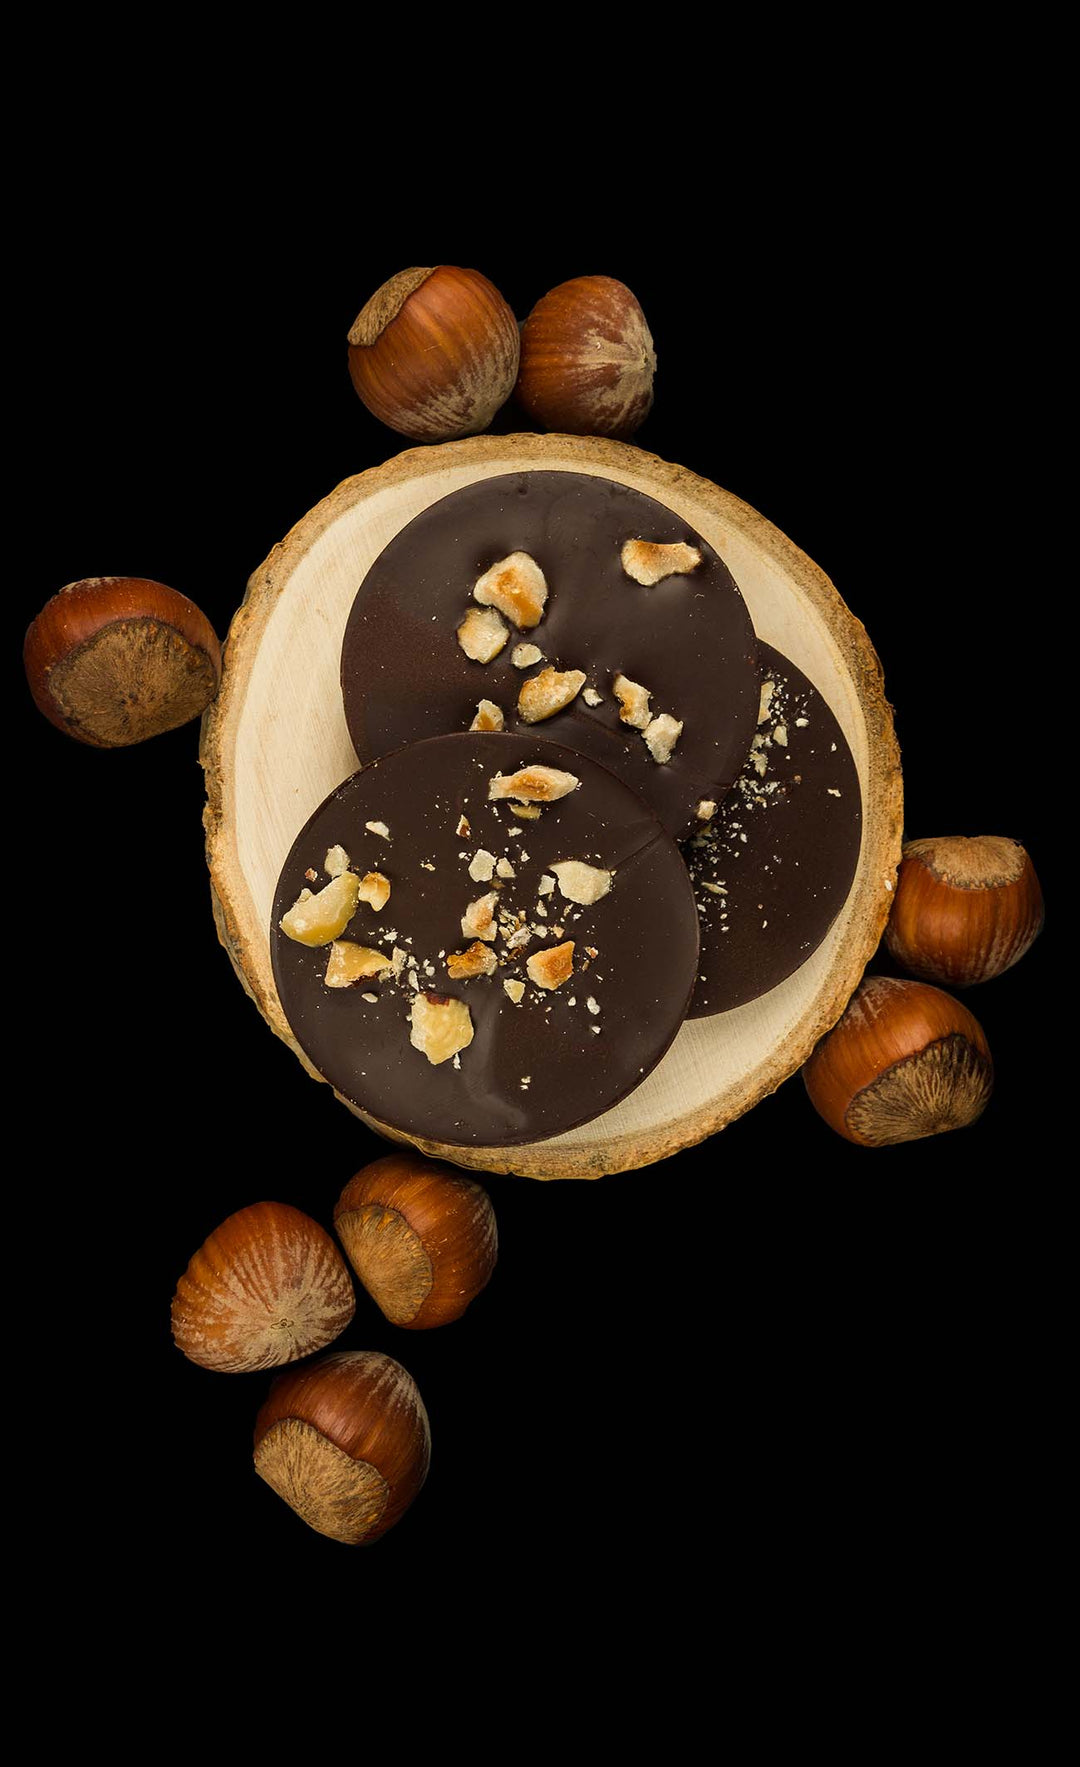 Goalz Allulose based dark chocolates with Hazelnut pieces surrounded by hazelnuts with shells